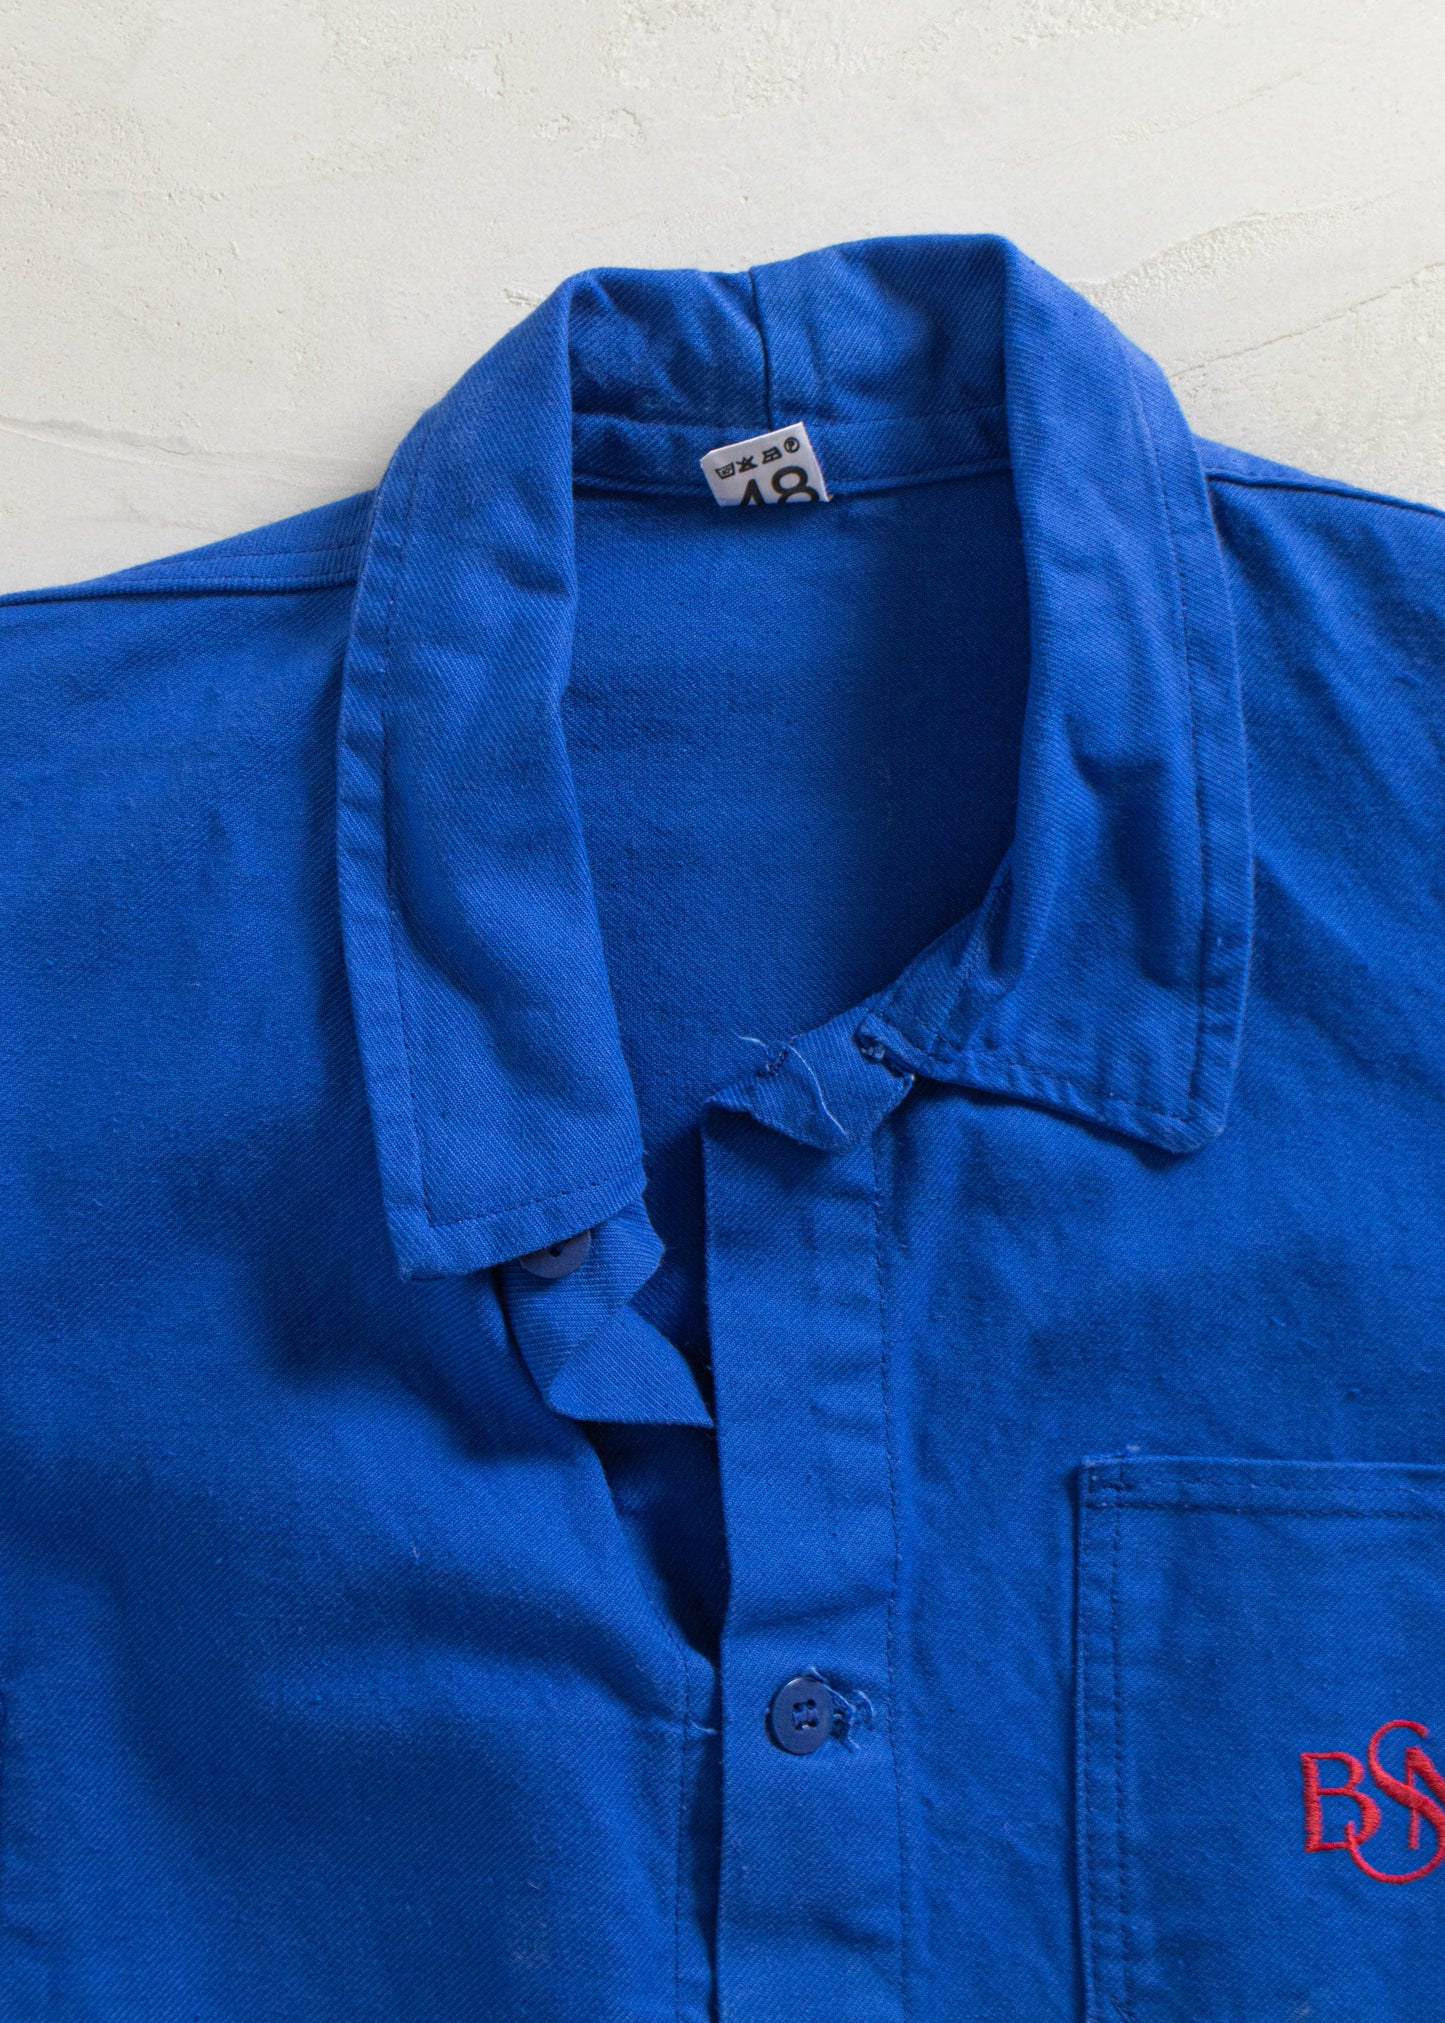 1980s Bleu de Travail European Workwear Chore Jacket Size L/XL